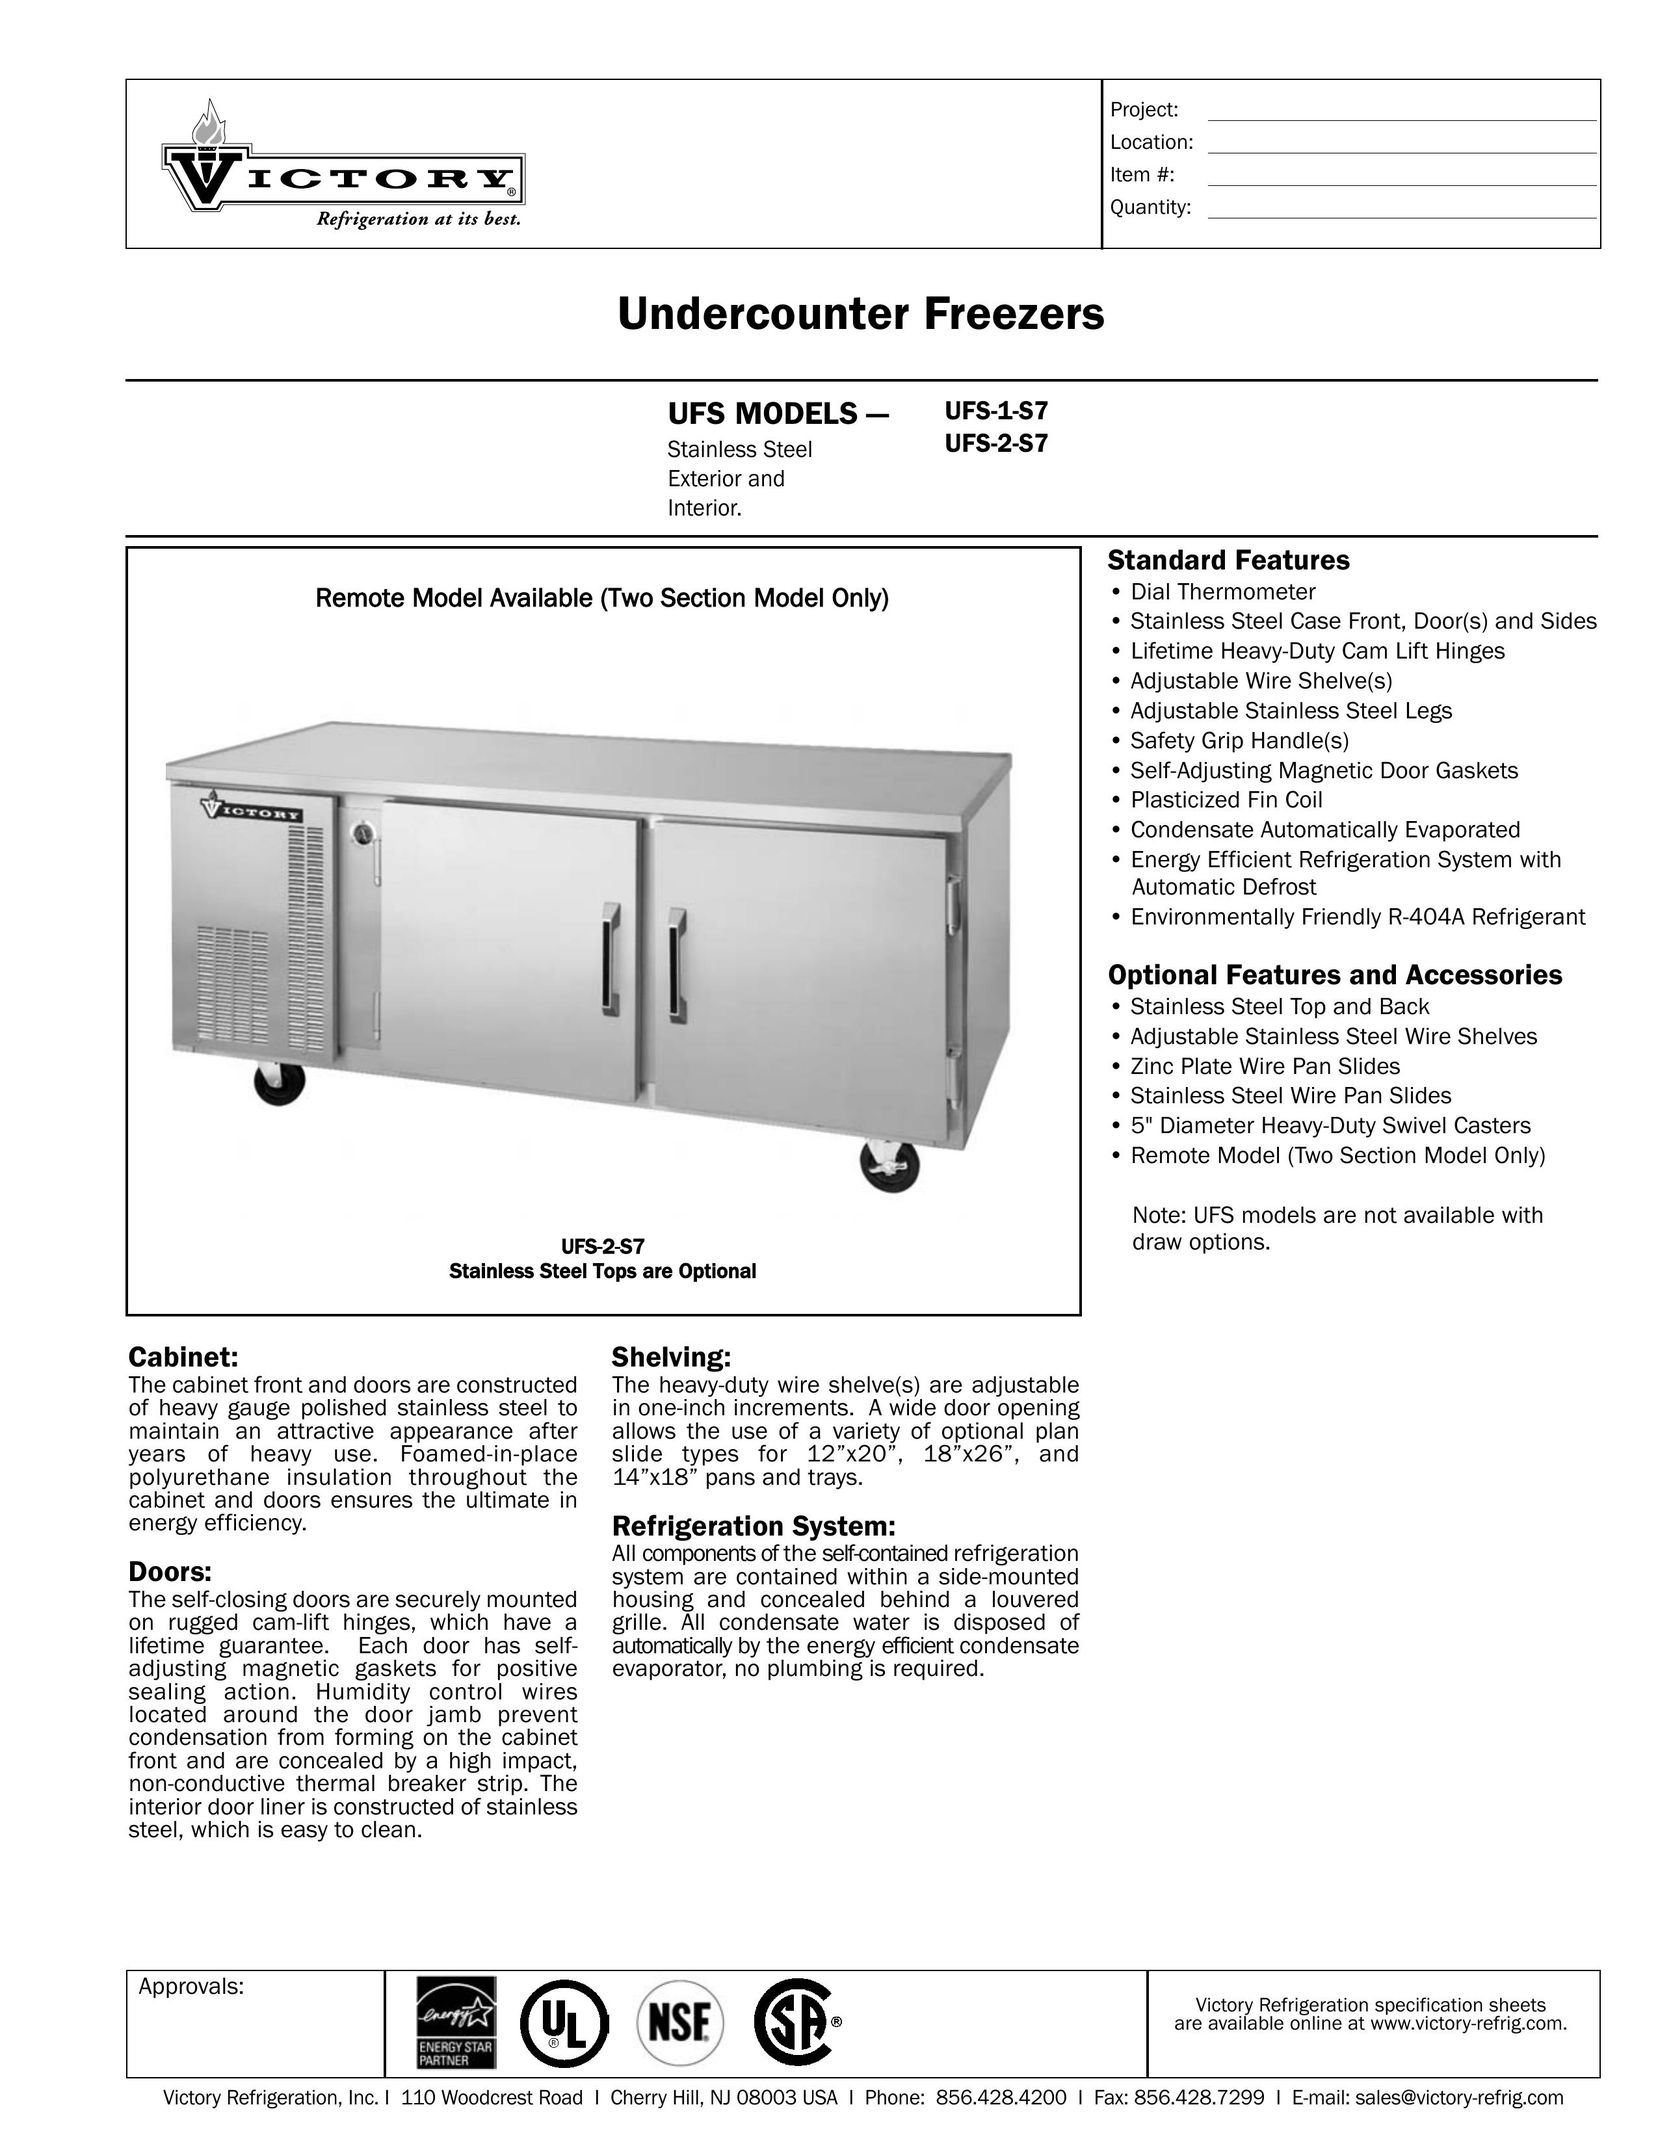 Victory Refrigeration UFS-2-S7 Freezer User Manual